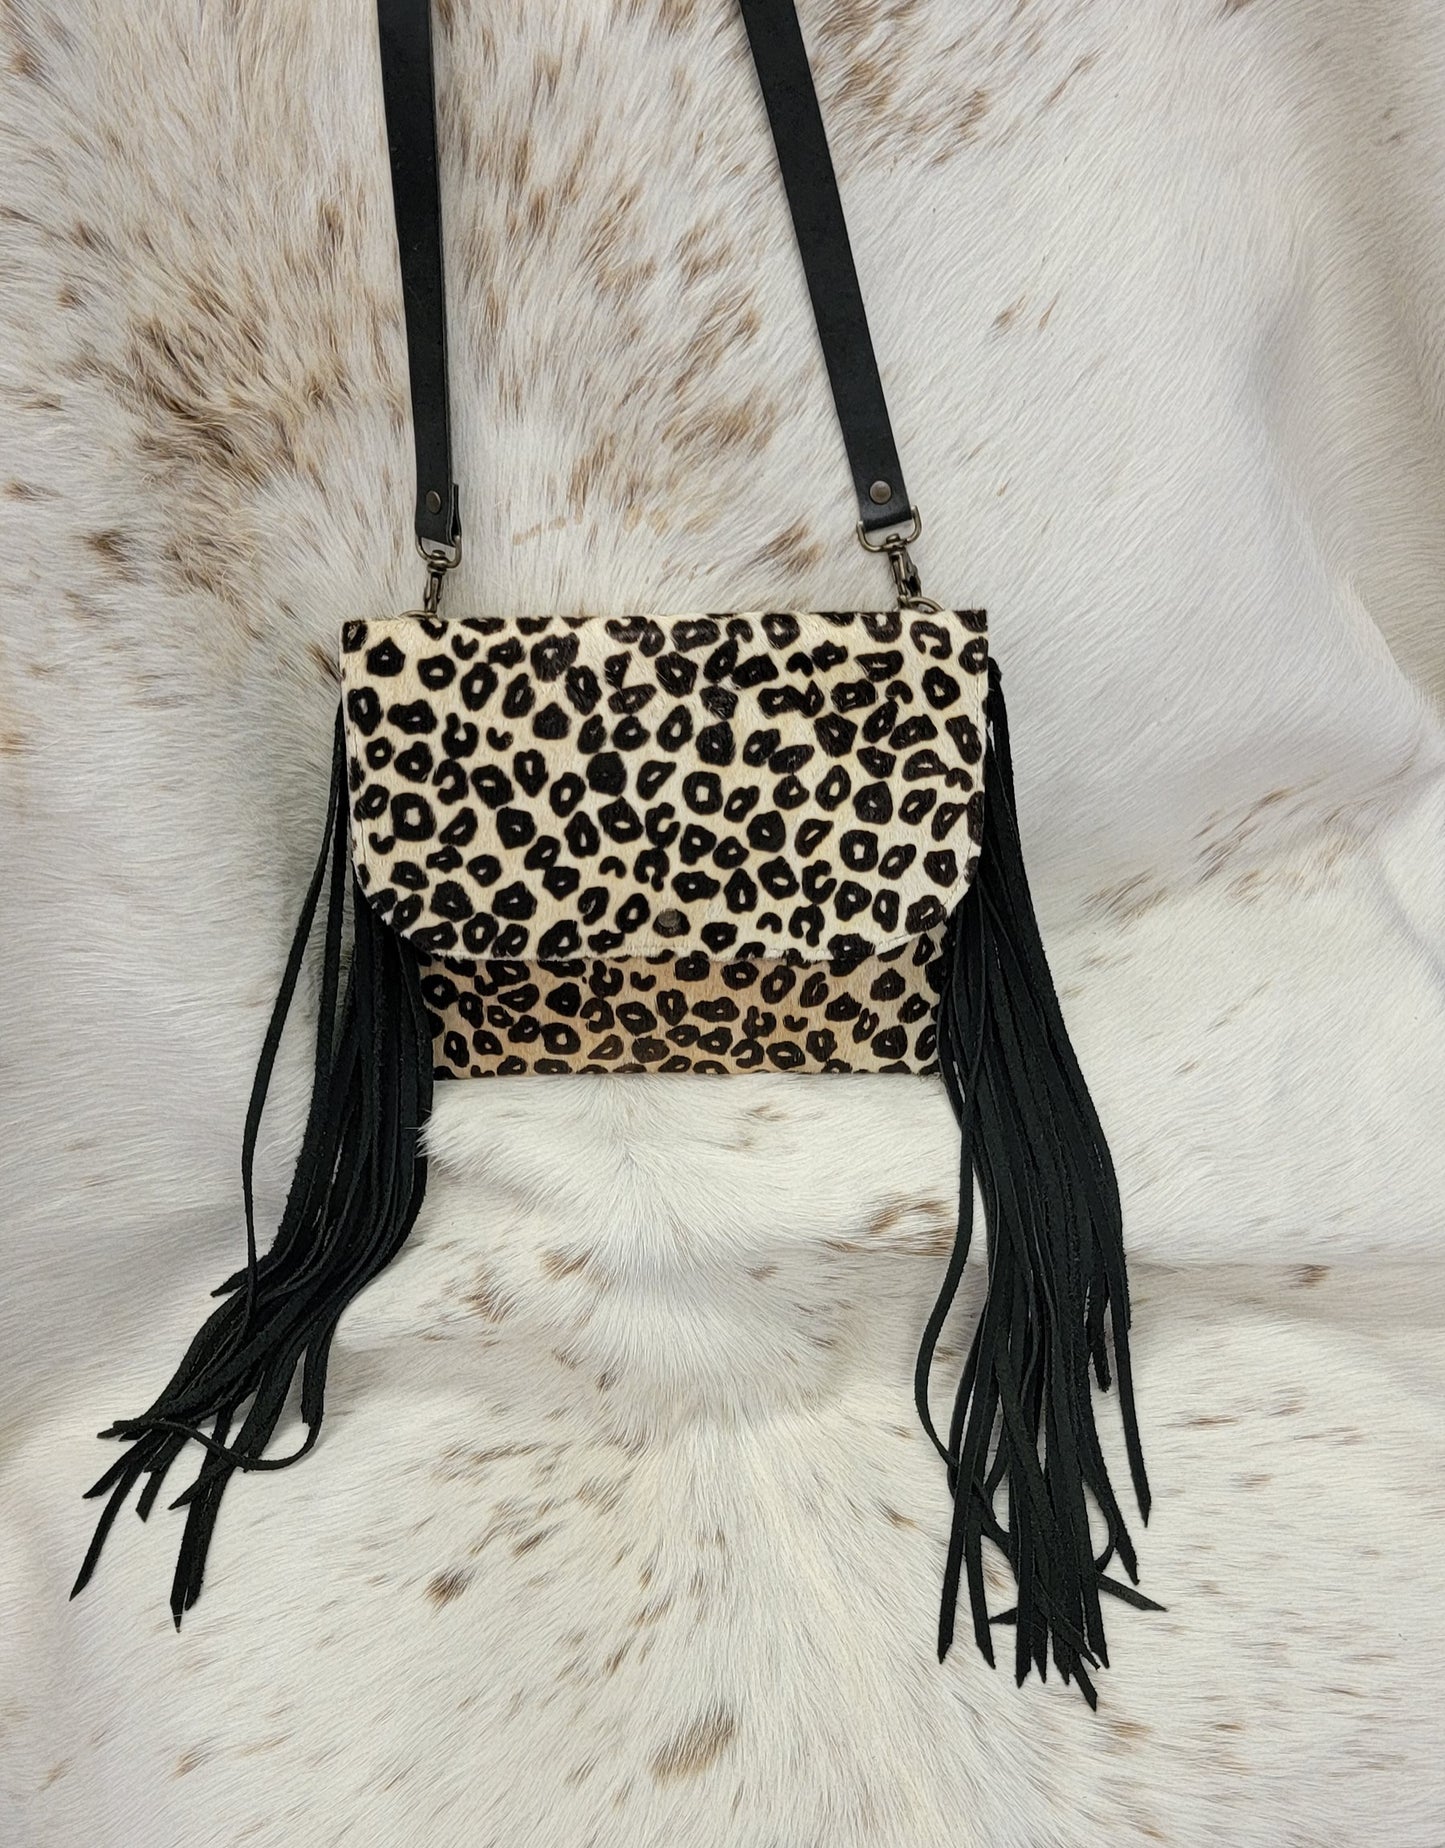 Dallas Cowhide Handbag With Fringe In Cheetah Print